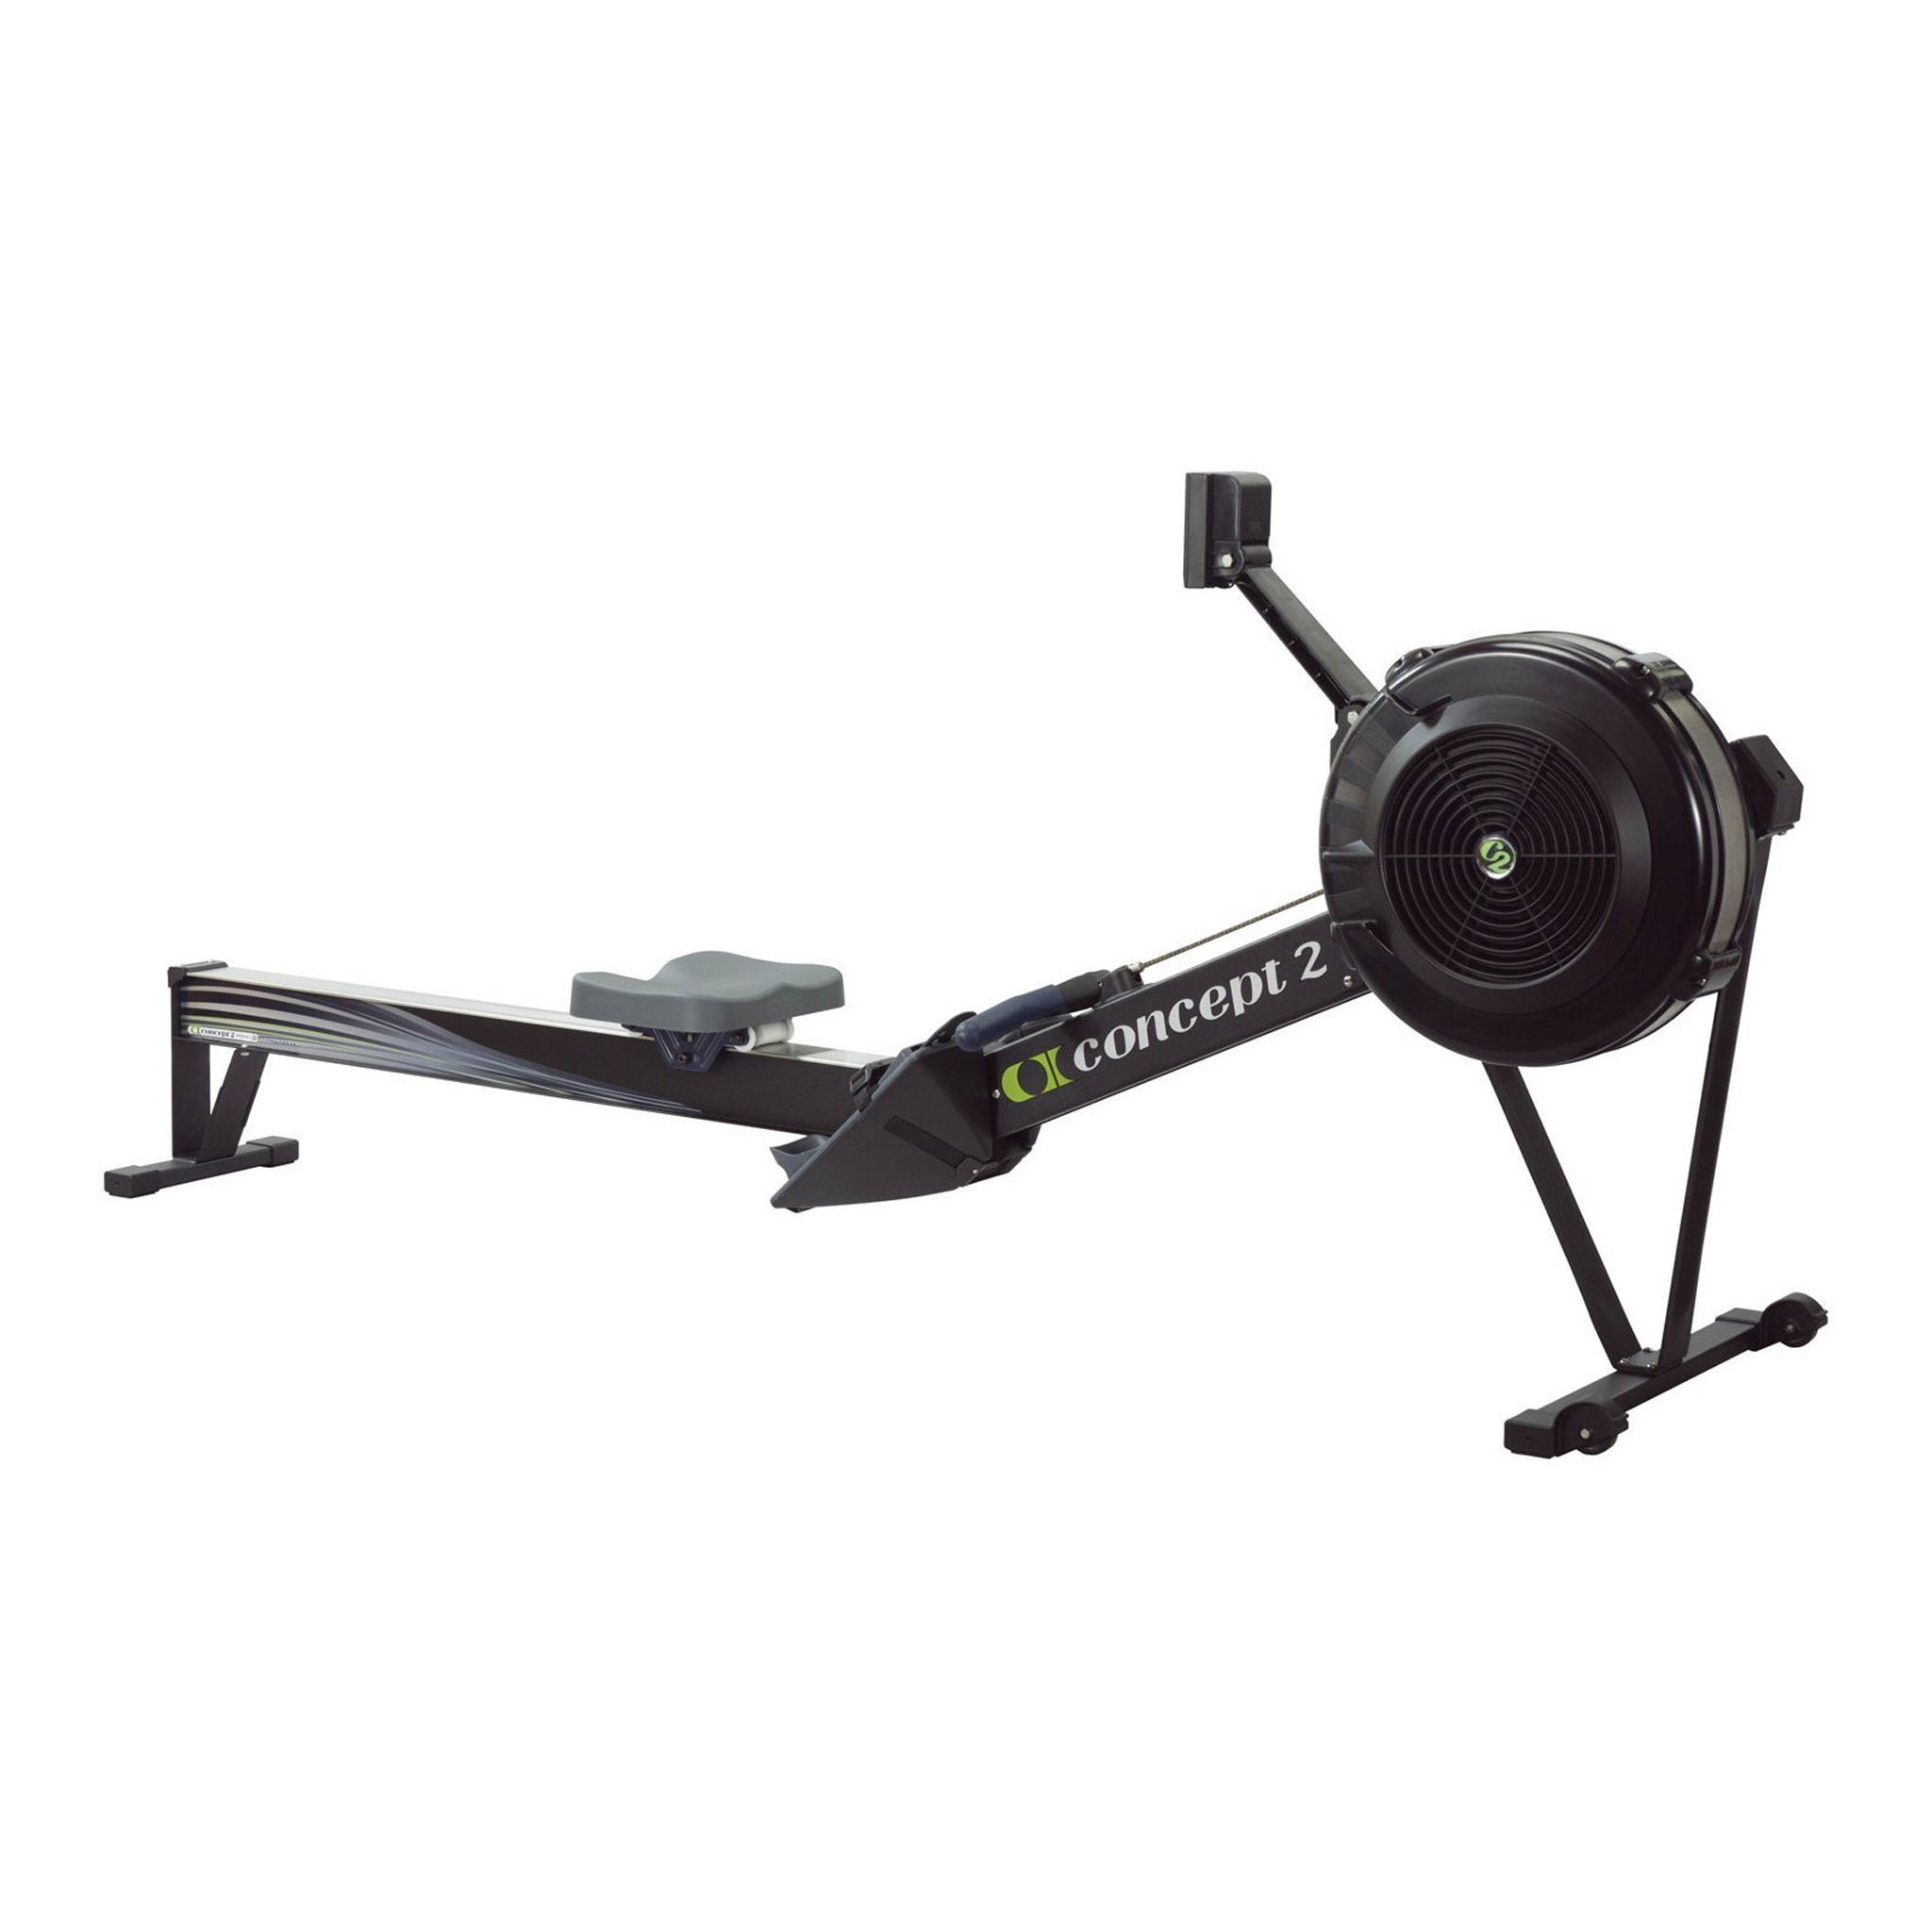 concept 2 model d rowing machine in black